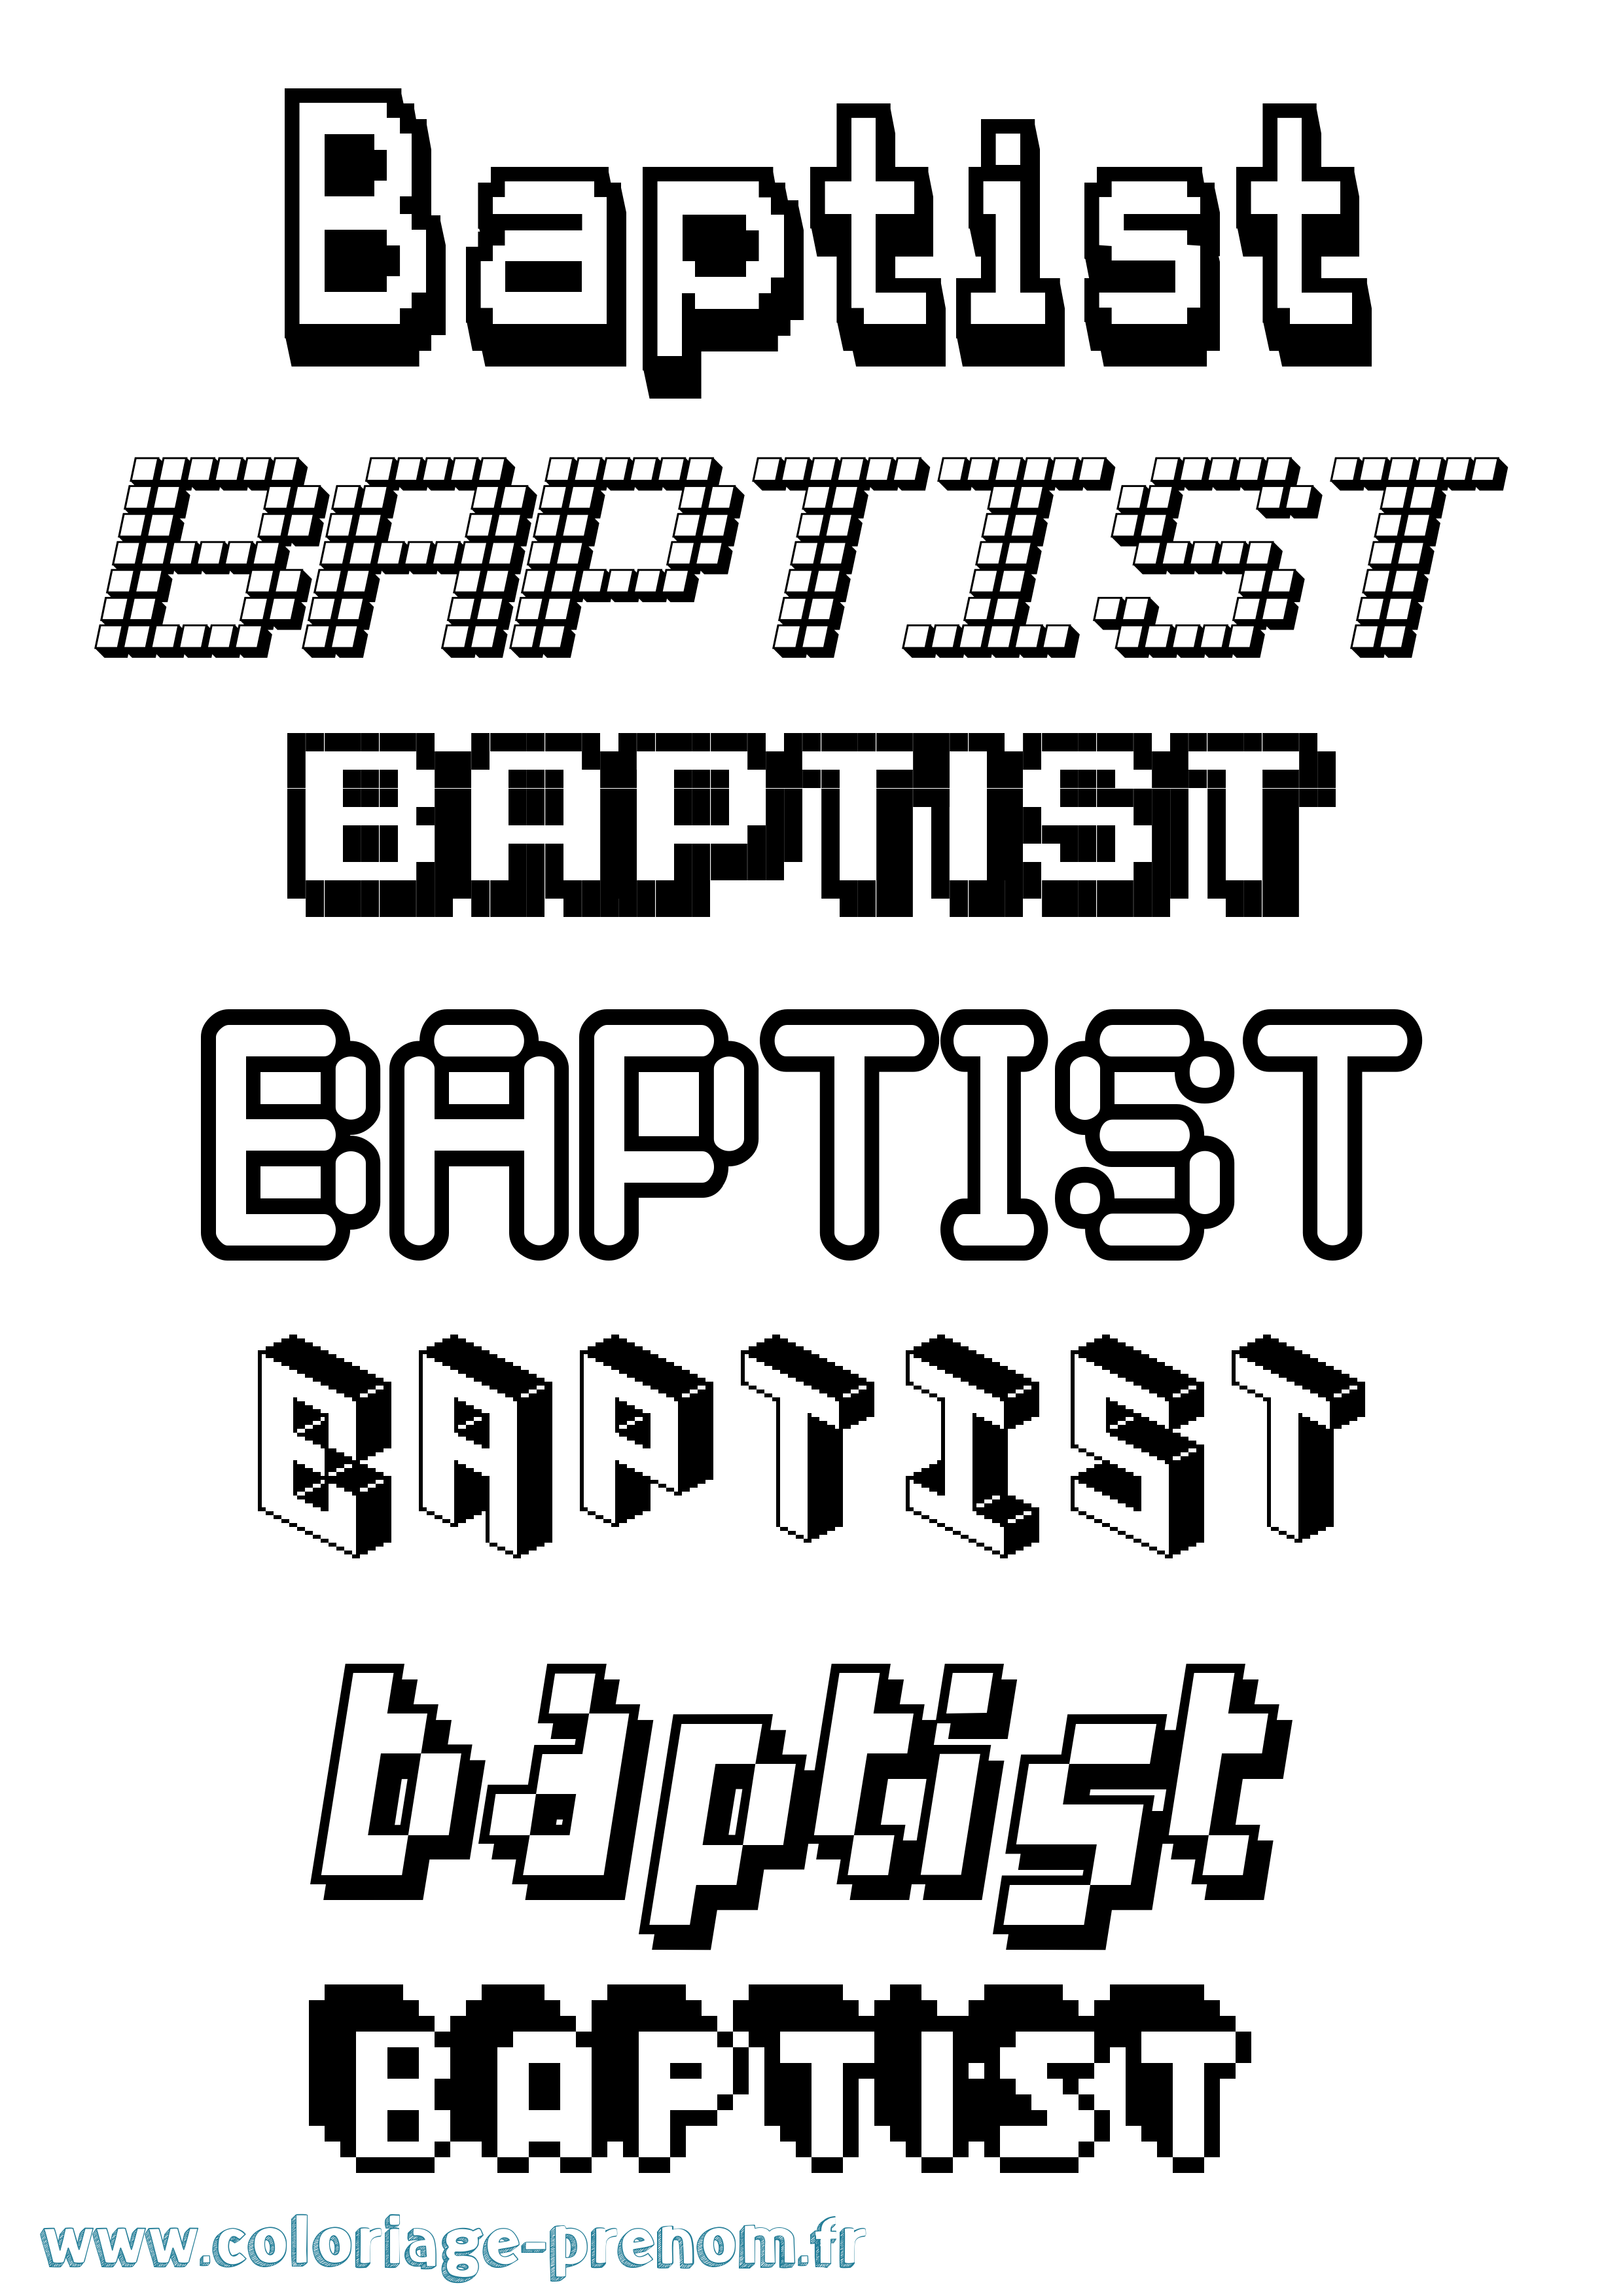 Coloriage prénom Baptist Pixel